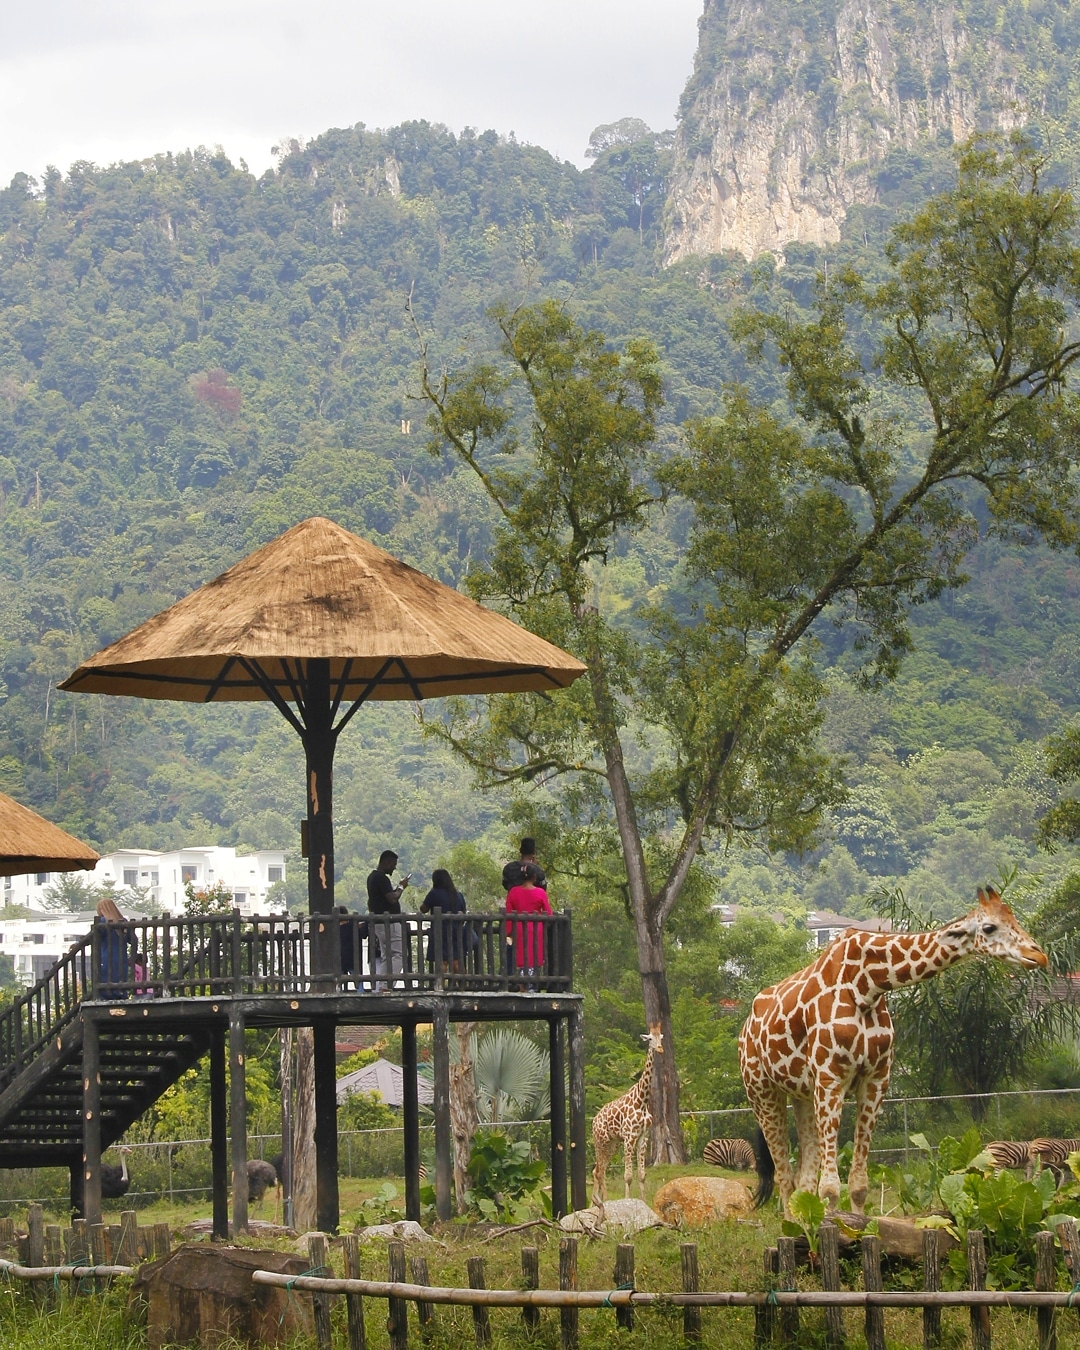 Zoo Negara giraffe enclosure